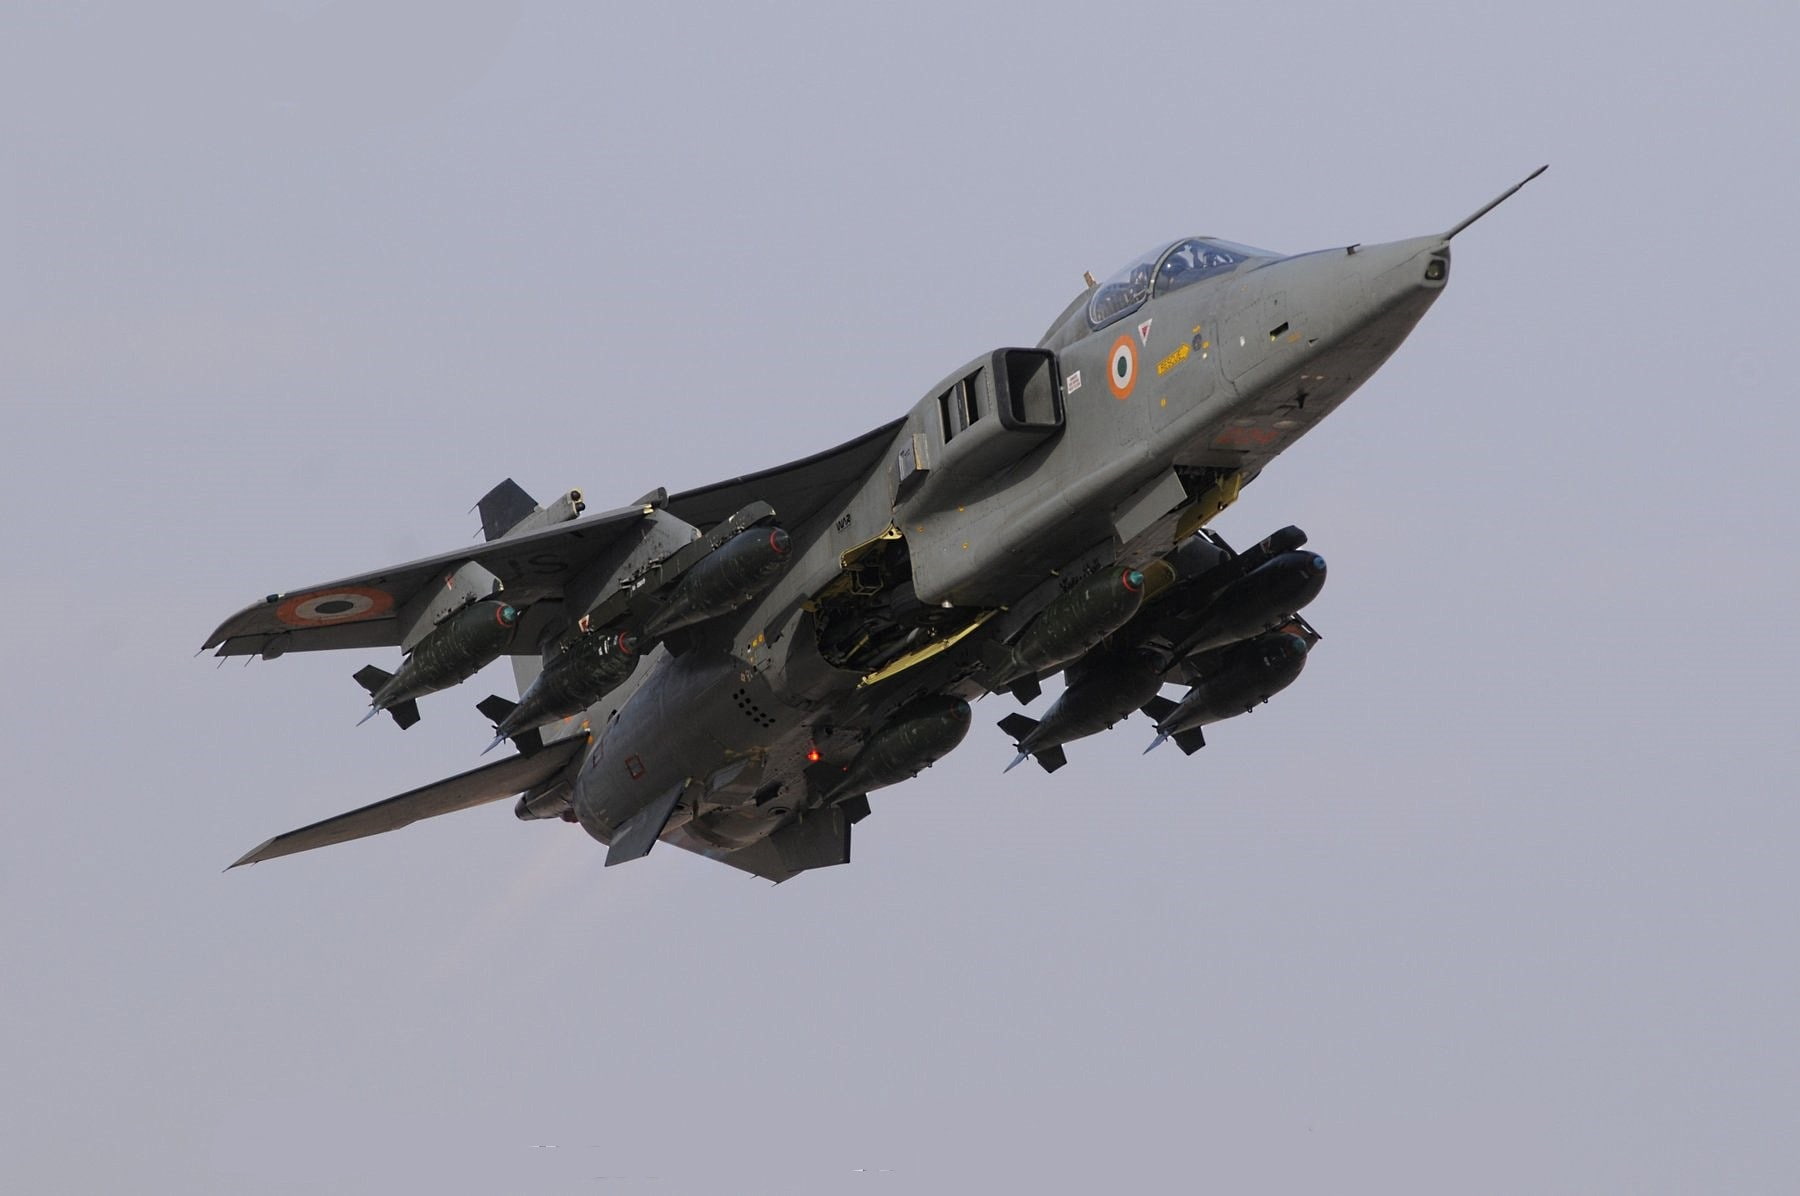 SEPECAT Jaguar, Indian Air Force, air vehicle, flying, sky